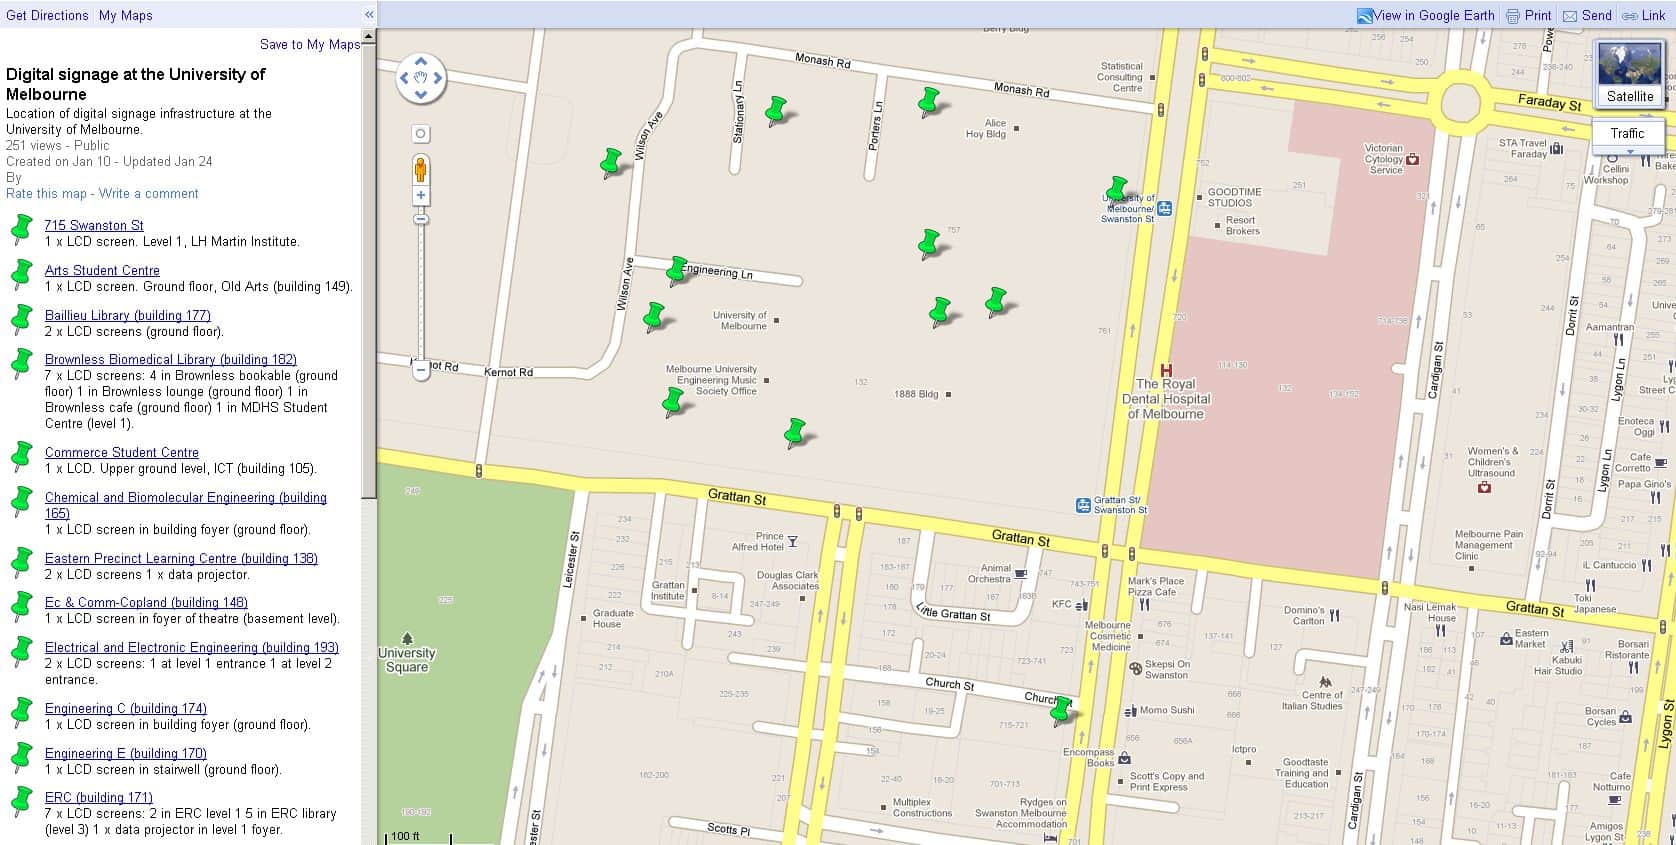 University of Melbourne Digital Signage Location